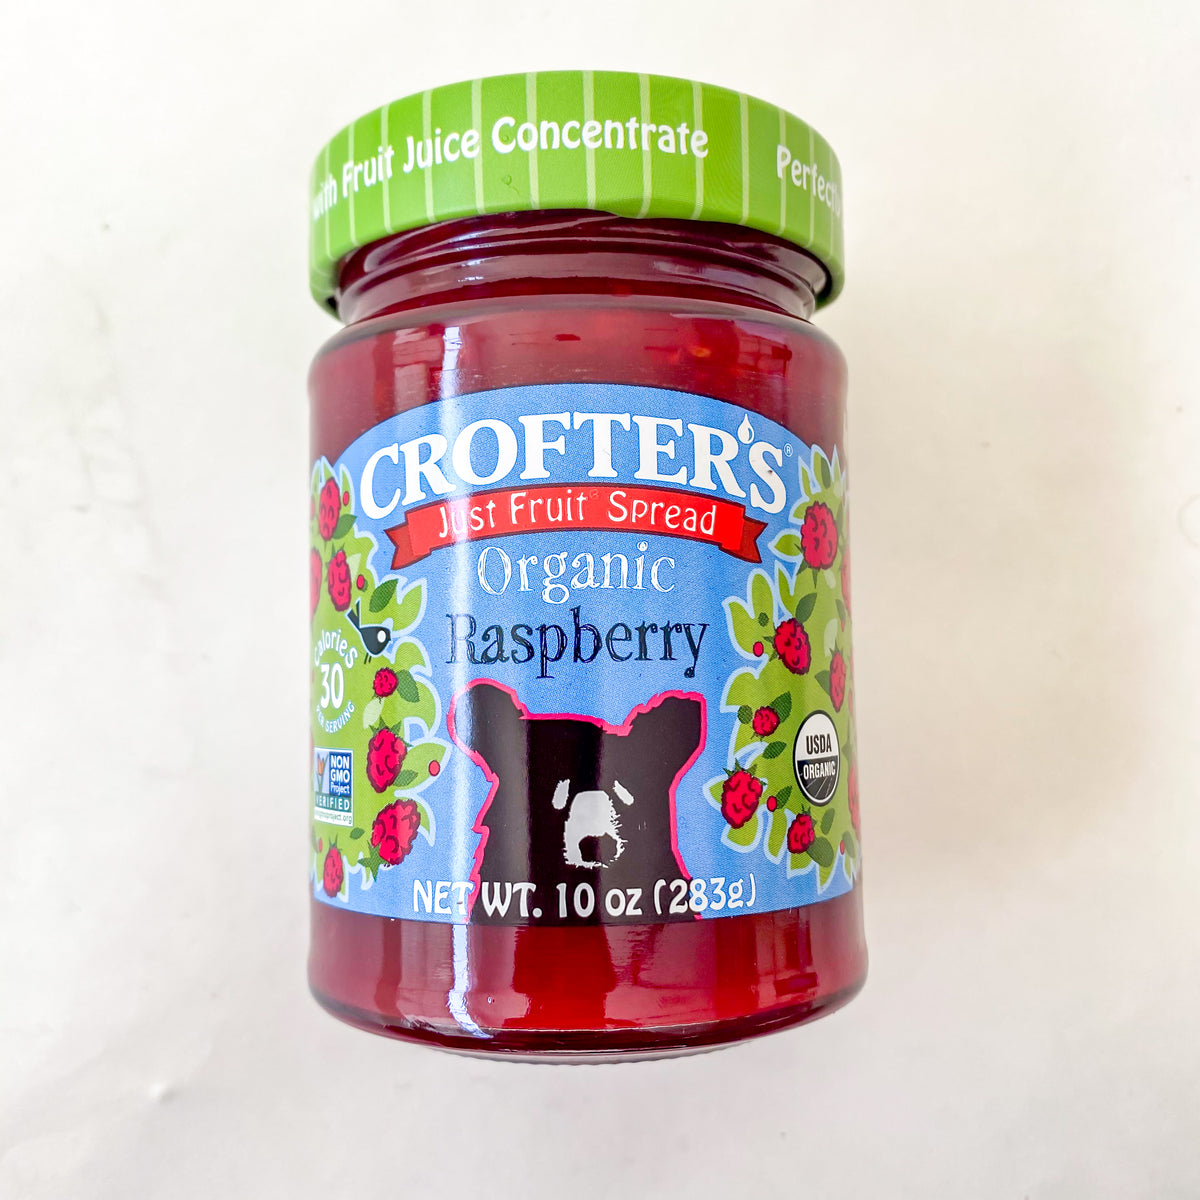 Crofters Just Fruit Spread Organic Raspberry